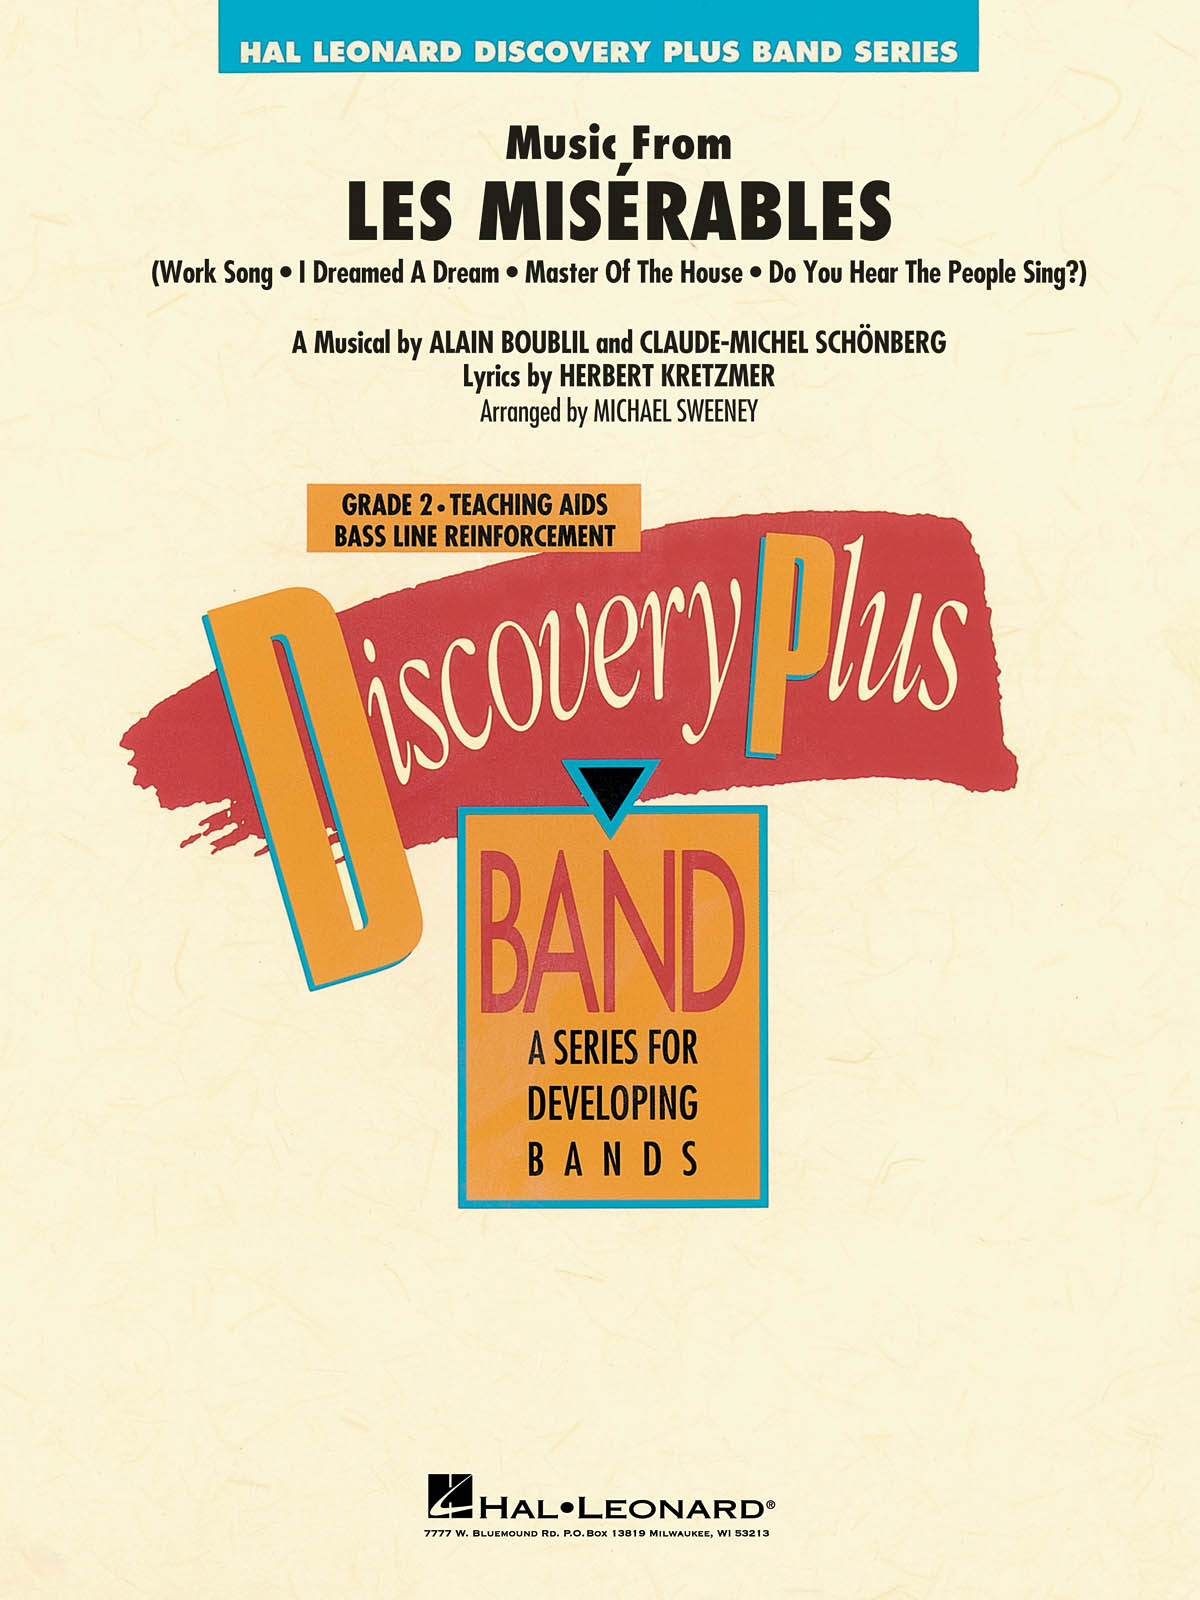 Music from Les Misérables - noty pro orchestr